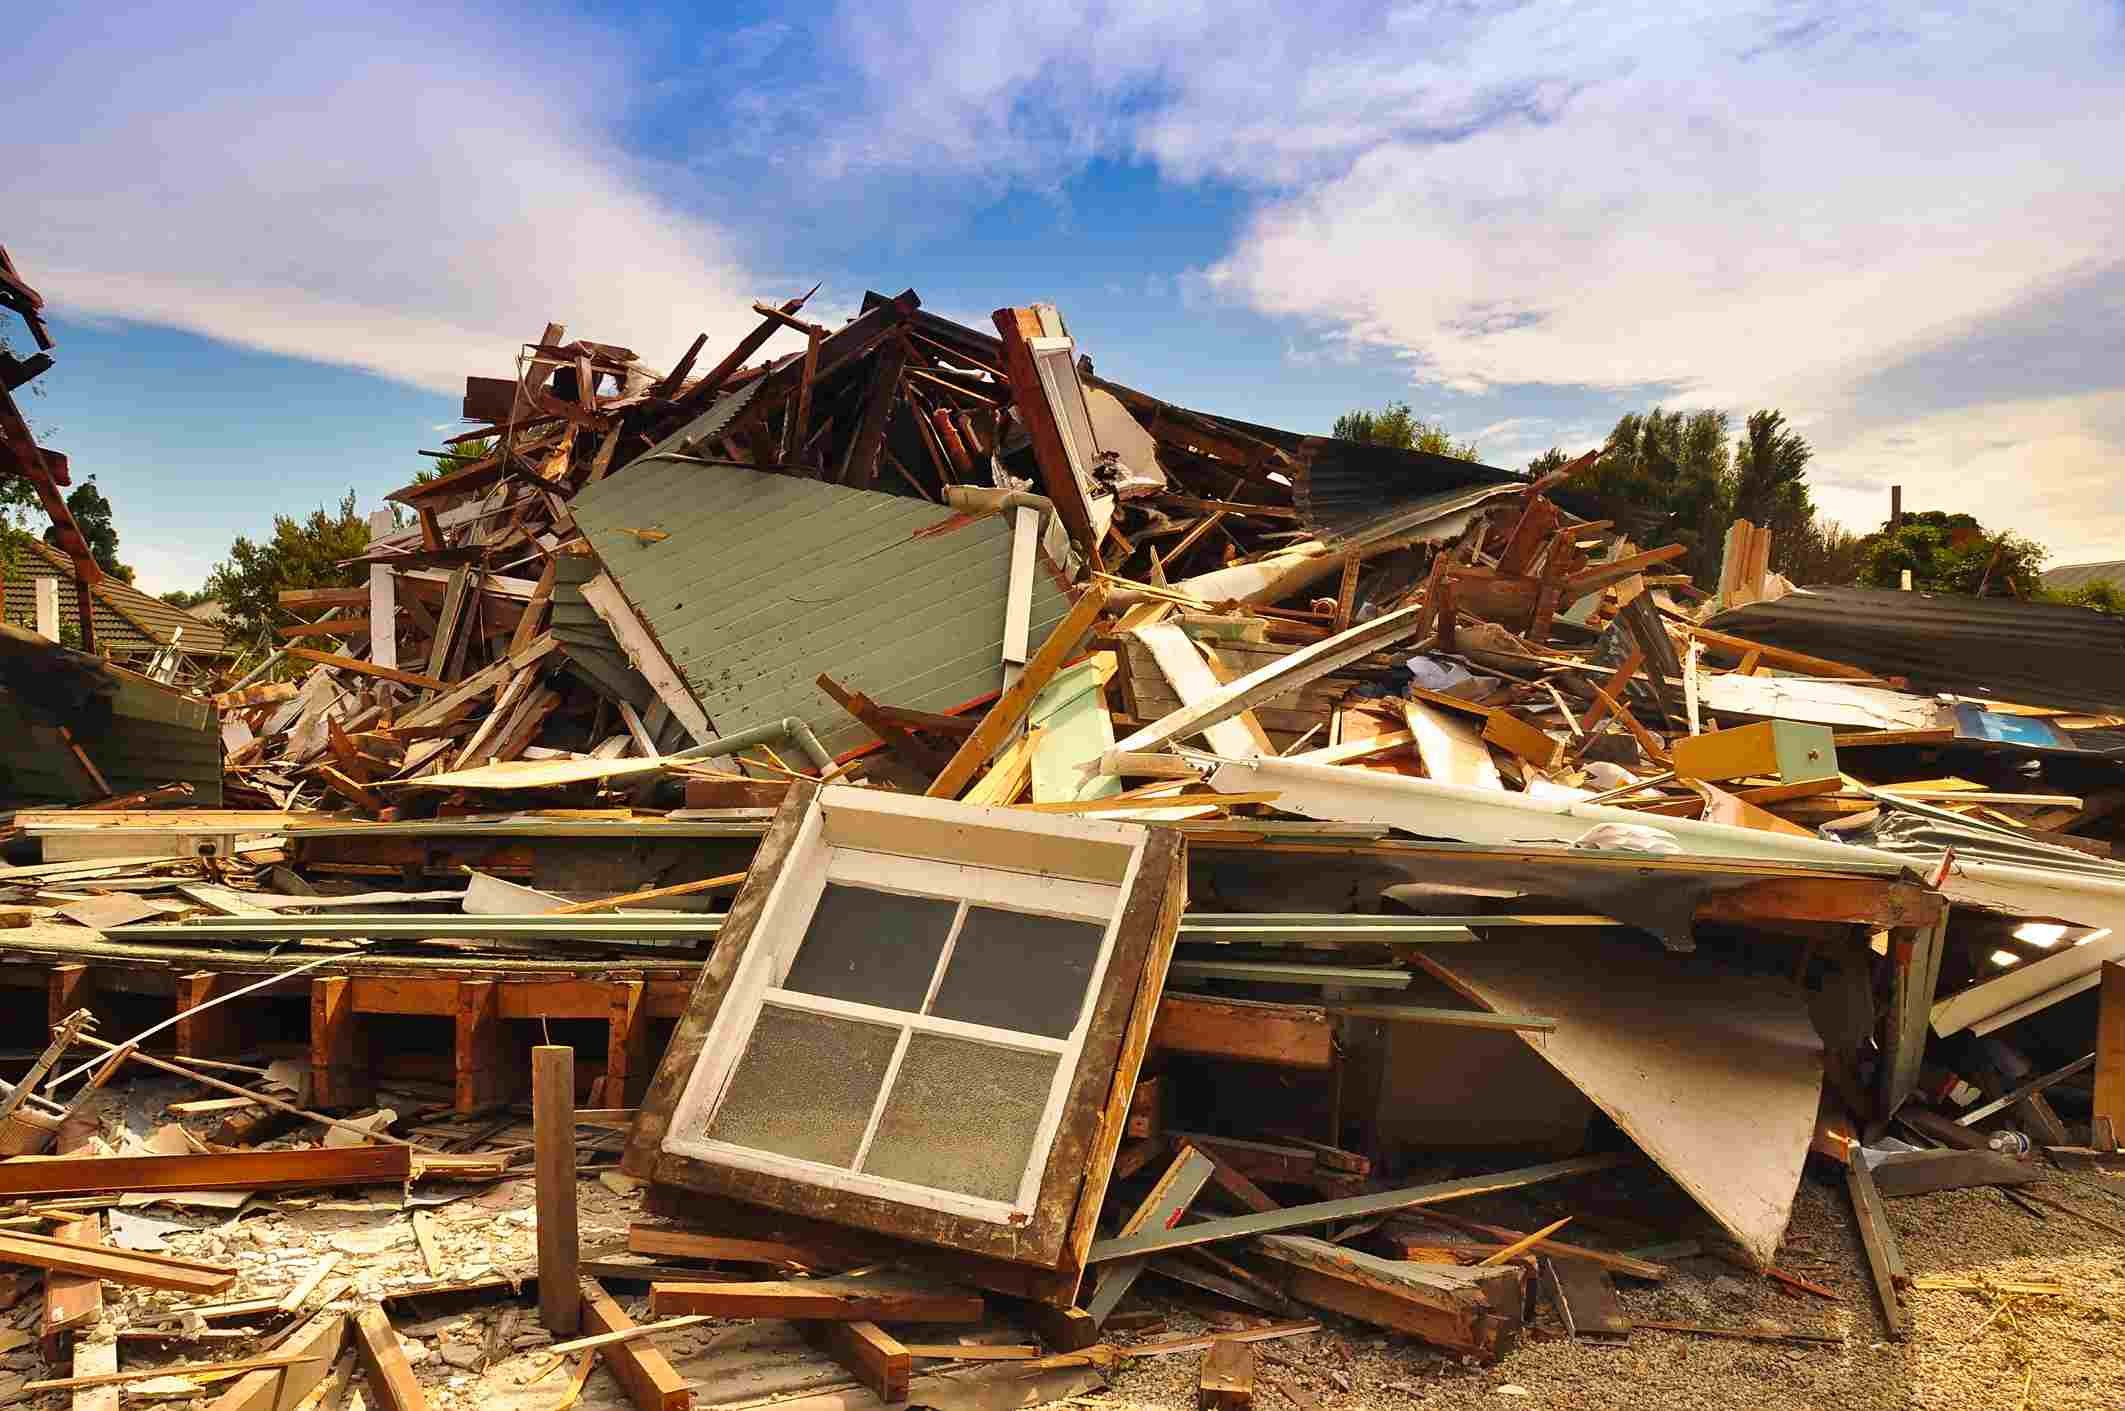 More information about "10 στοχευμένες δράσεις για τη μείωση των επιπτώσεων από τις φυσικές καταστροφές"